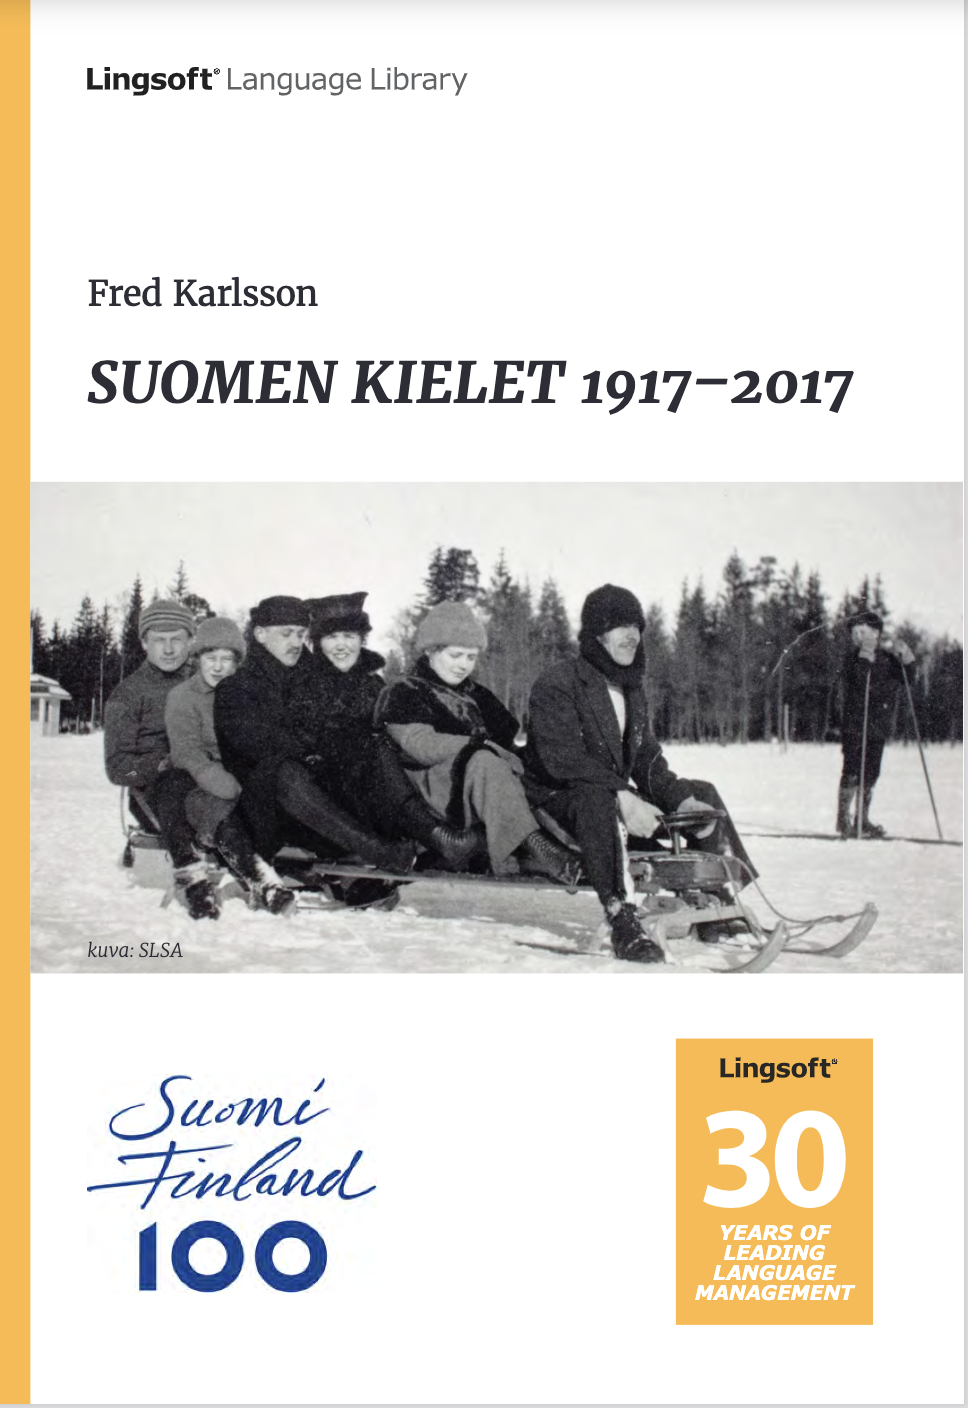 Fred Karlsson, Vesa Koivisto: Suomen kielet 1917–2017 (EBook, Finnish language, Lingsoft Oy)